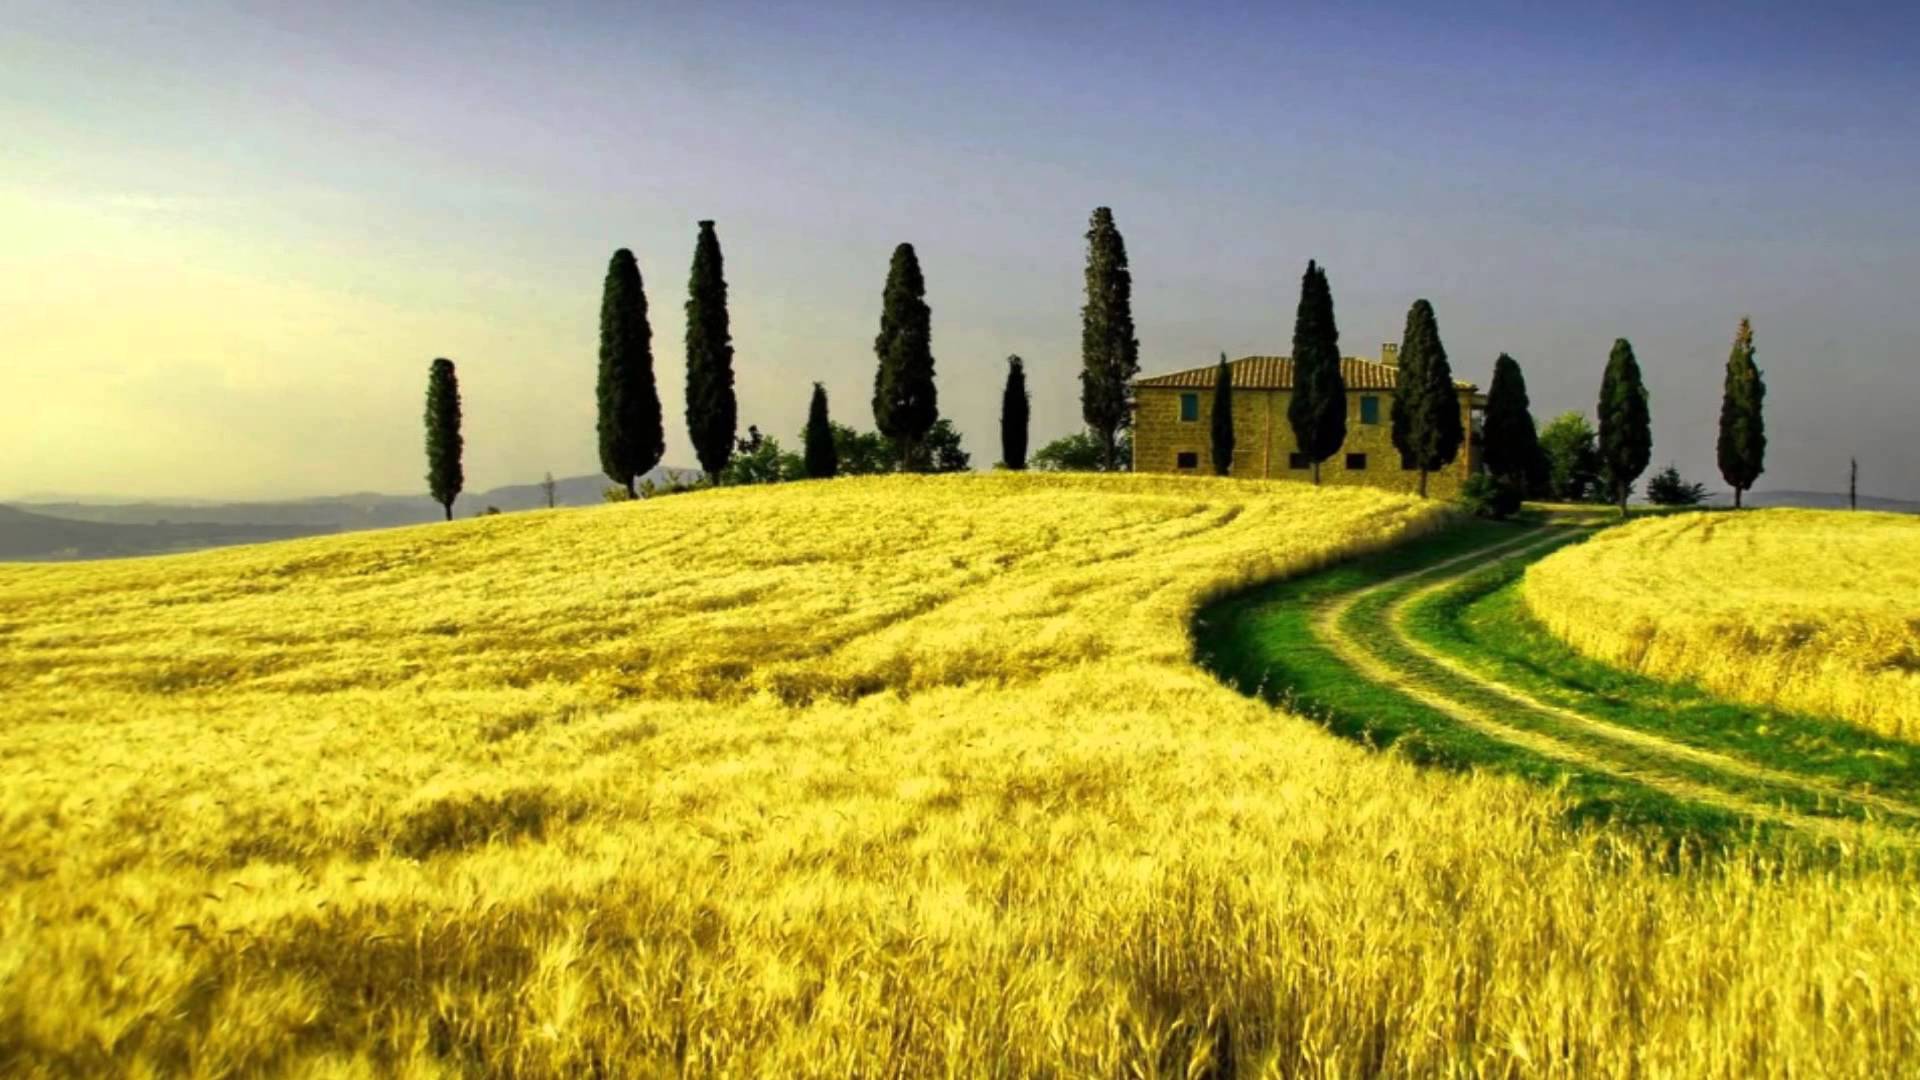 Tuscany Italy - beautiful scenery with flute music - YouTube